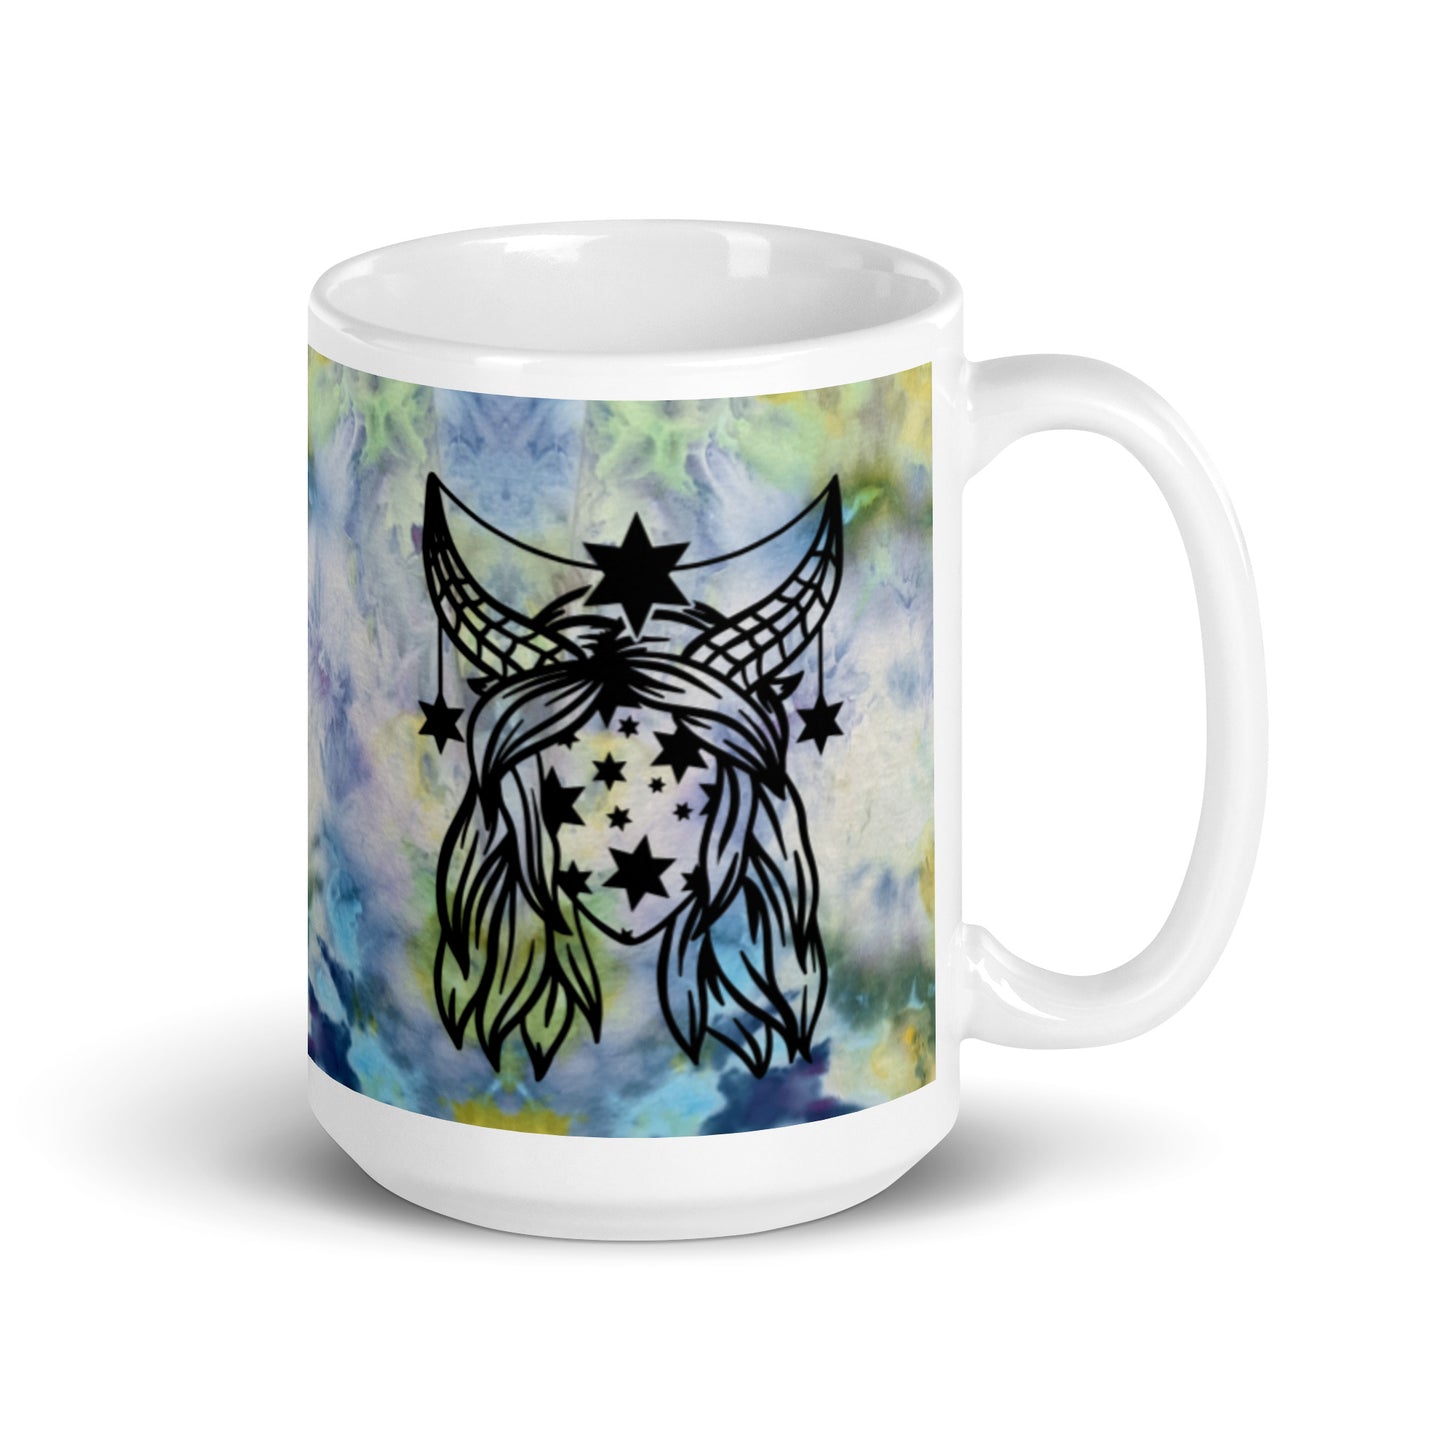 Magical Goddess with Horns Mug